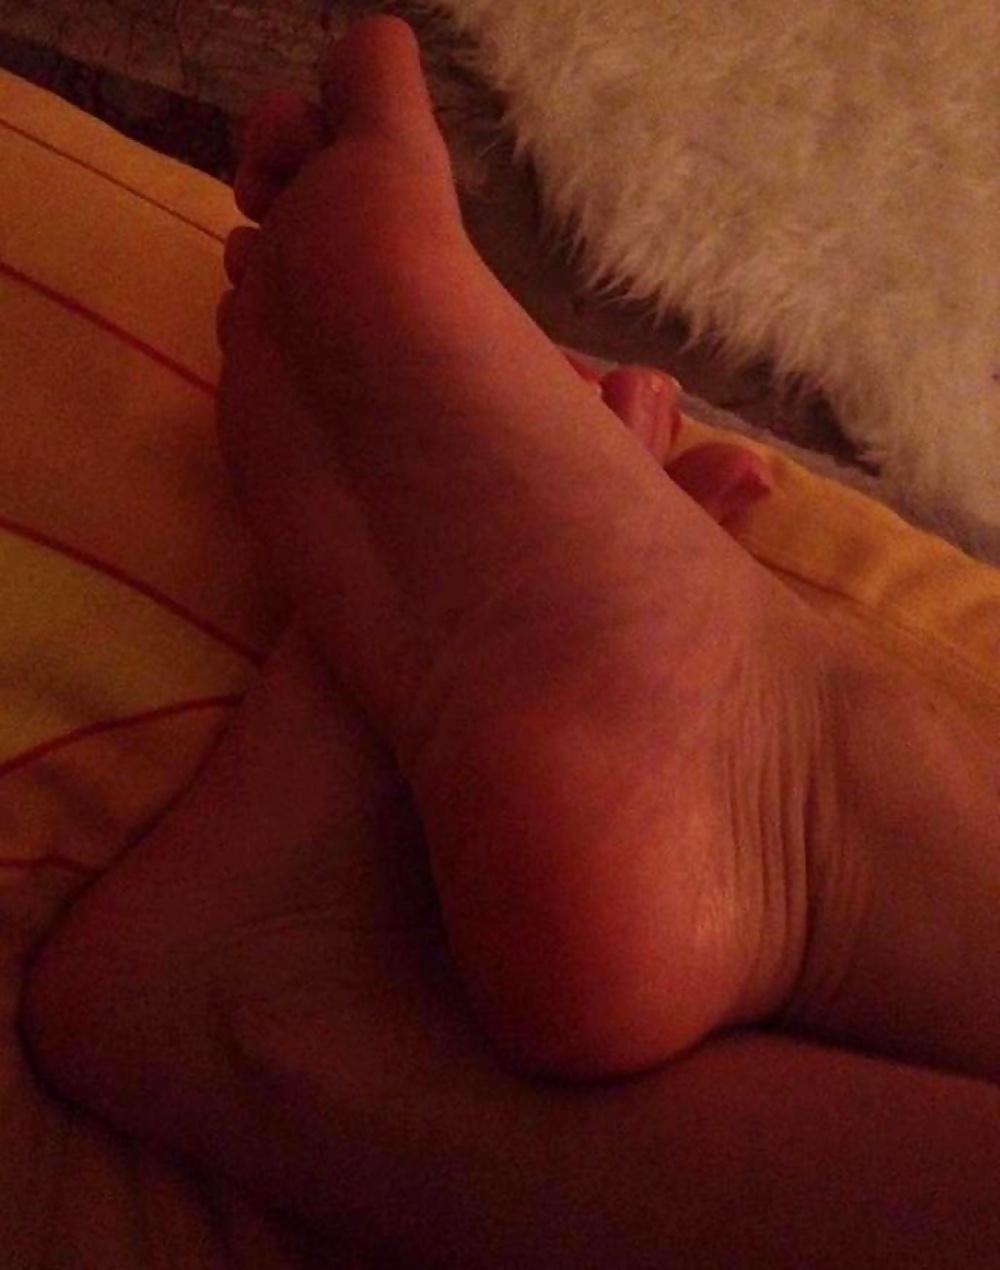 Female friend's feet adult photos